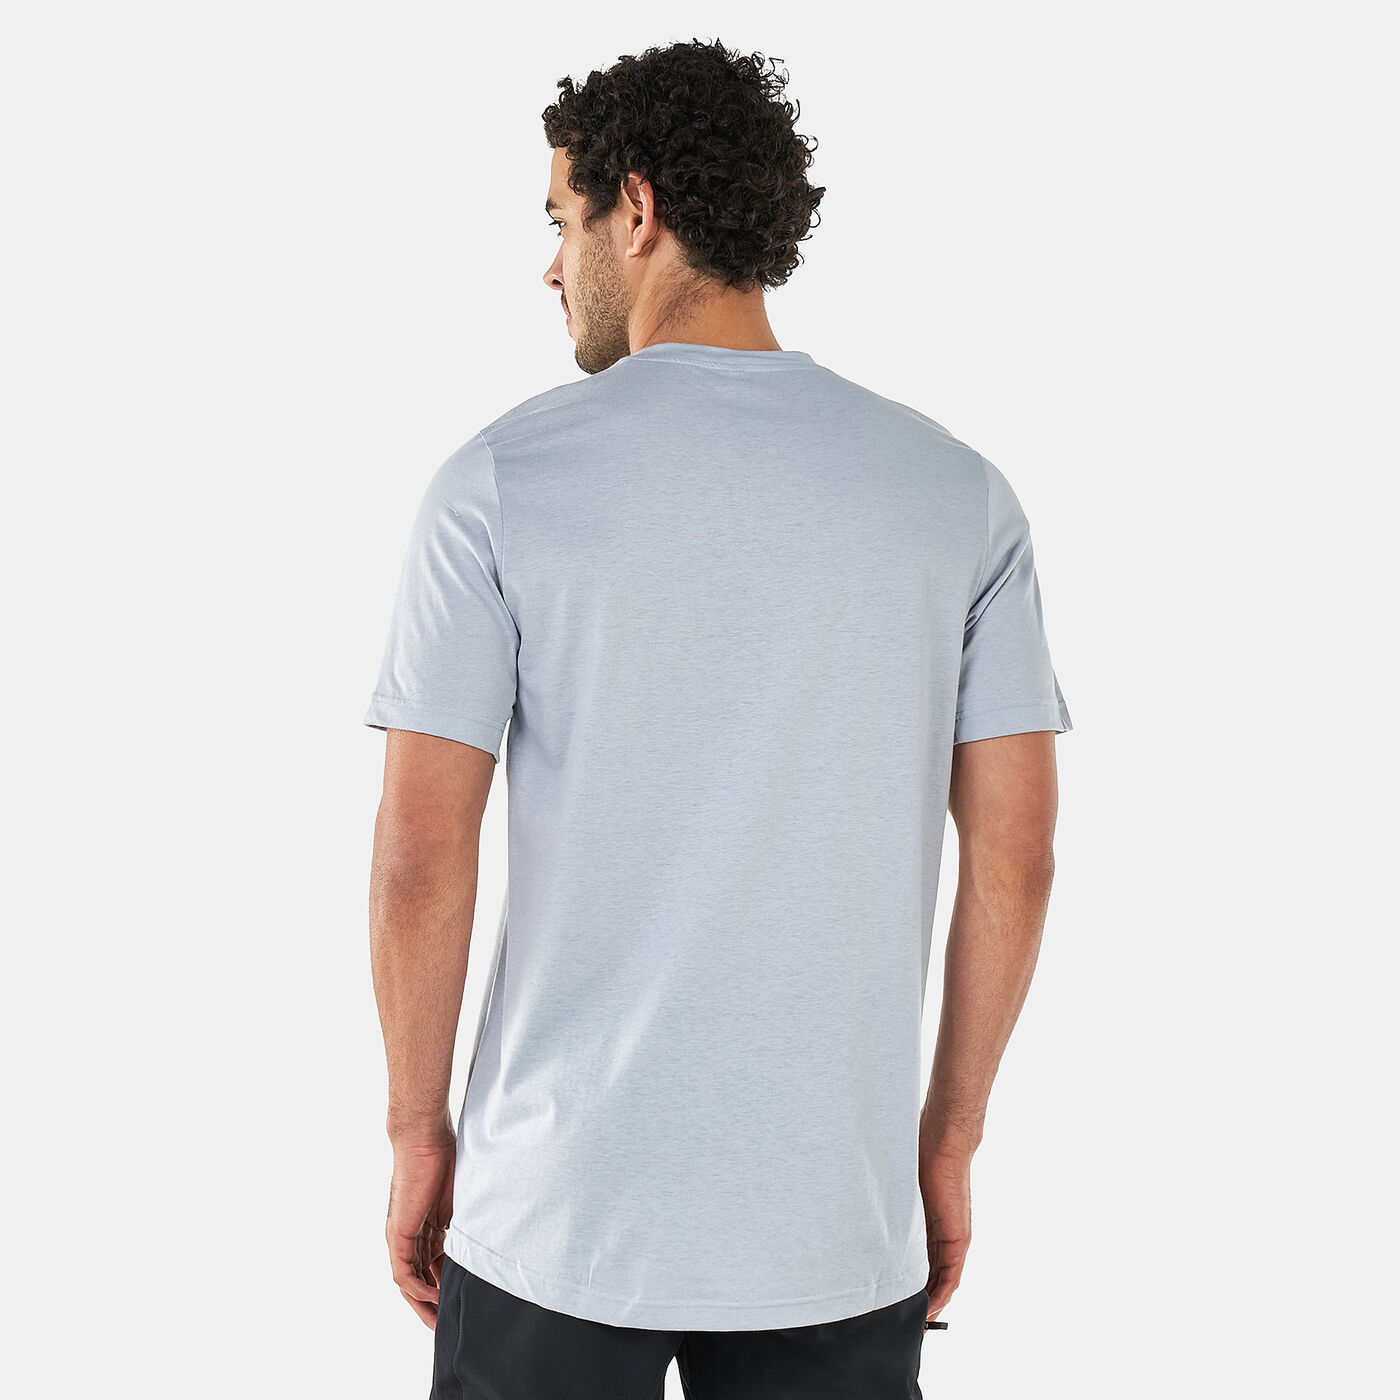 Men’s AEROREADY Designed To Move FeelReady Sport T-Shirt